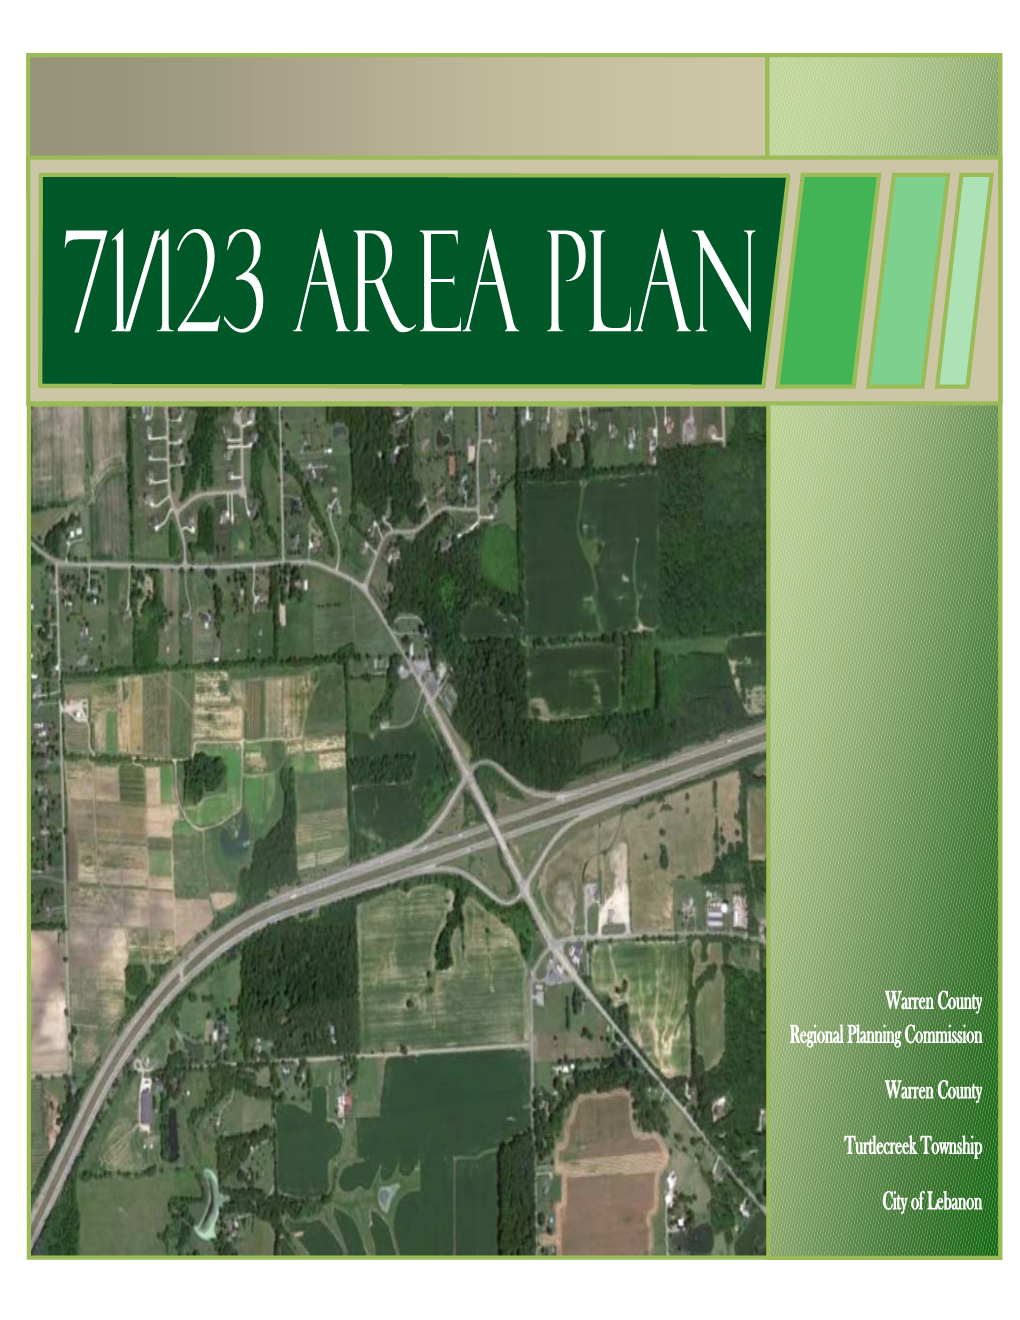 71/123 Area Plan